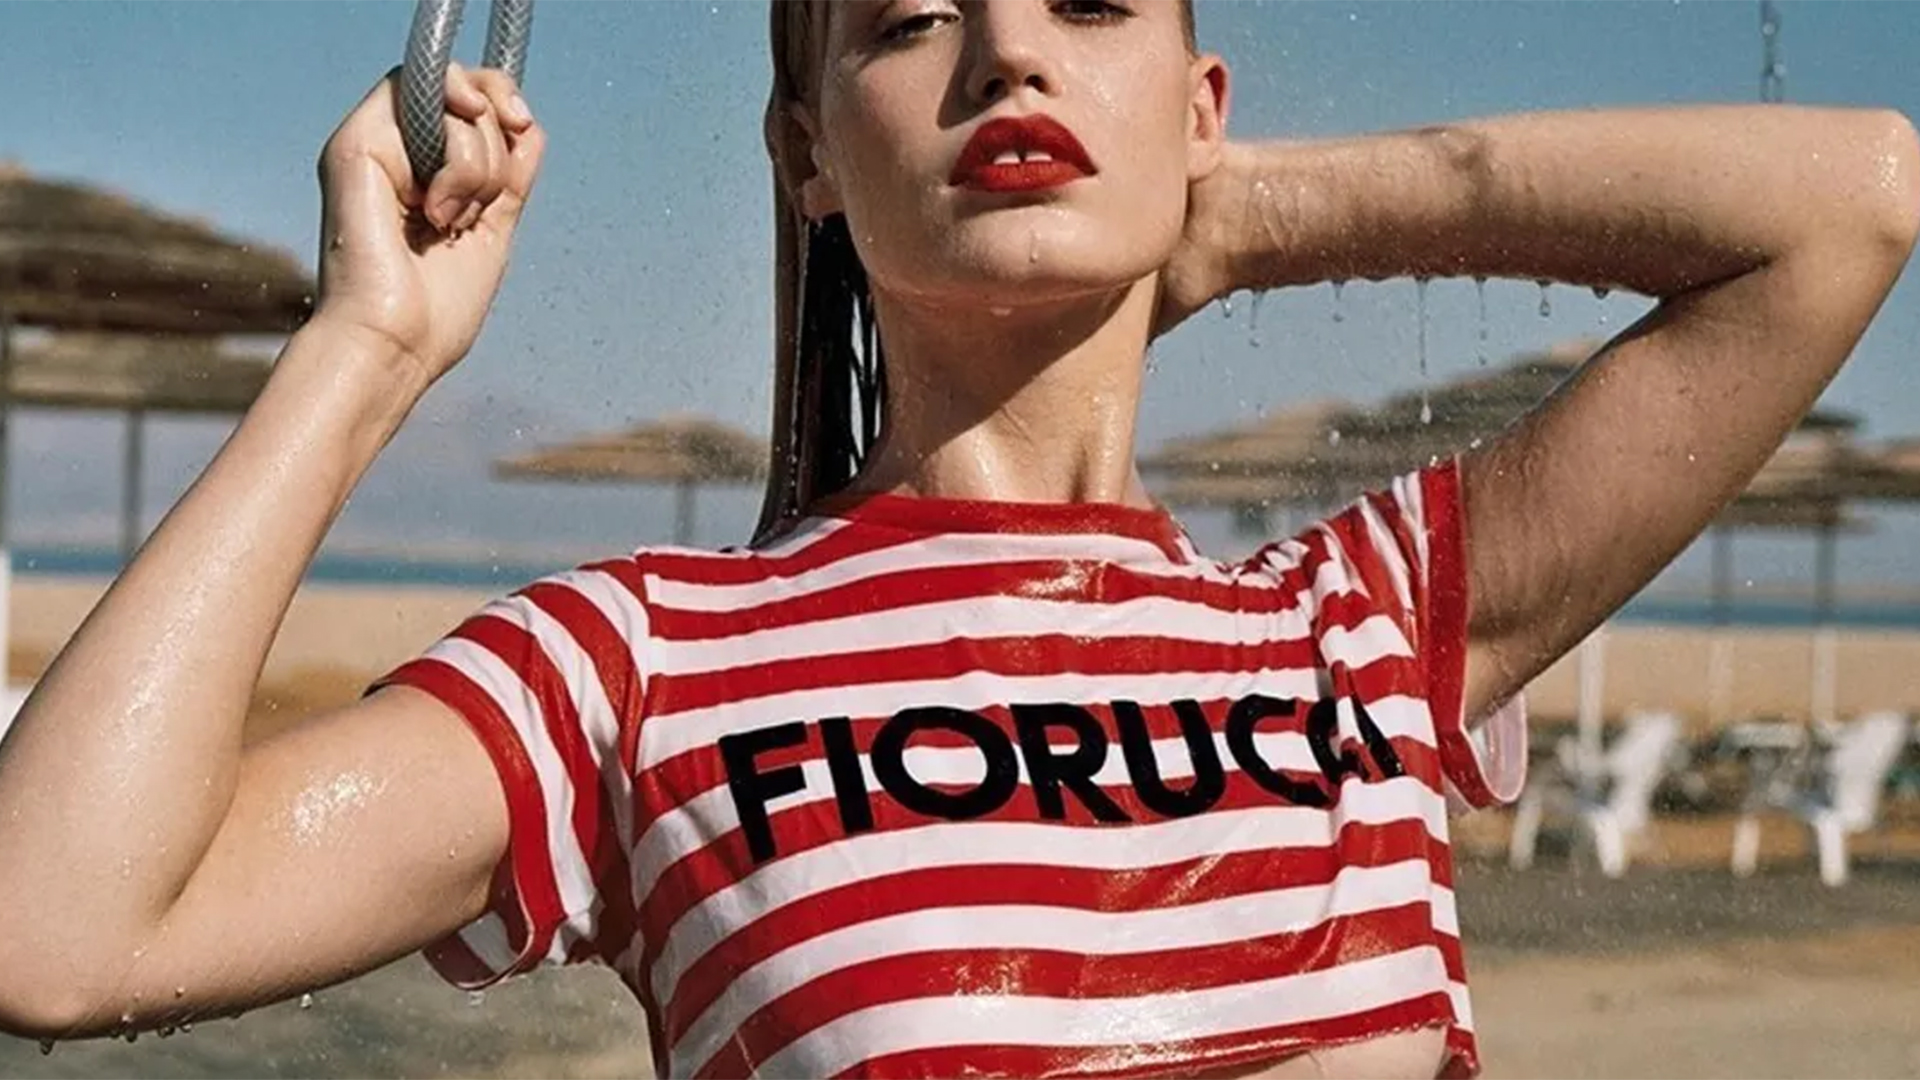 Daniel Fletcher exits Fiorucci to focus on own brand - TheIndustry.fashion